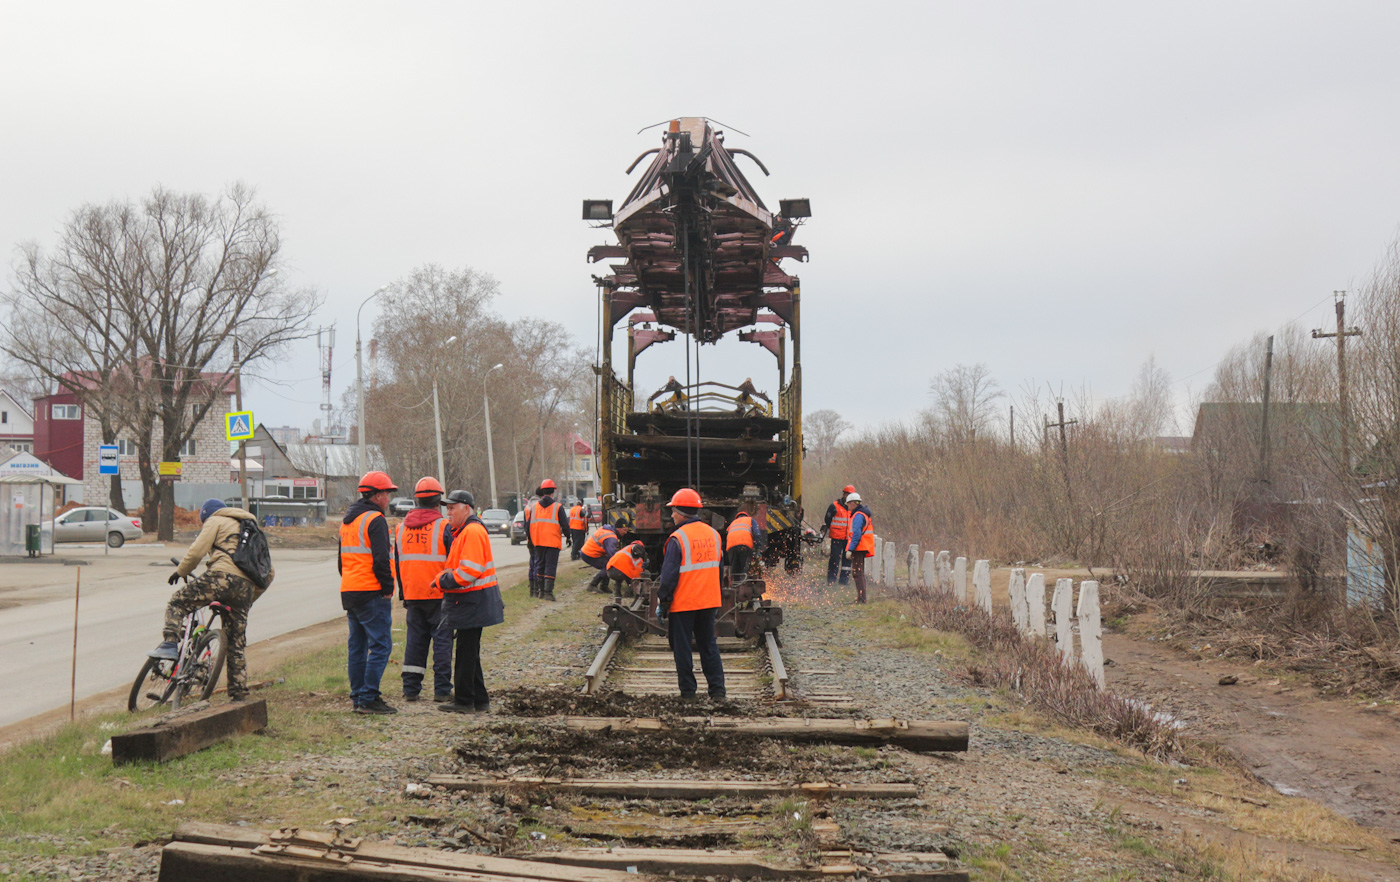 Gorky Railway — Different photos